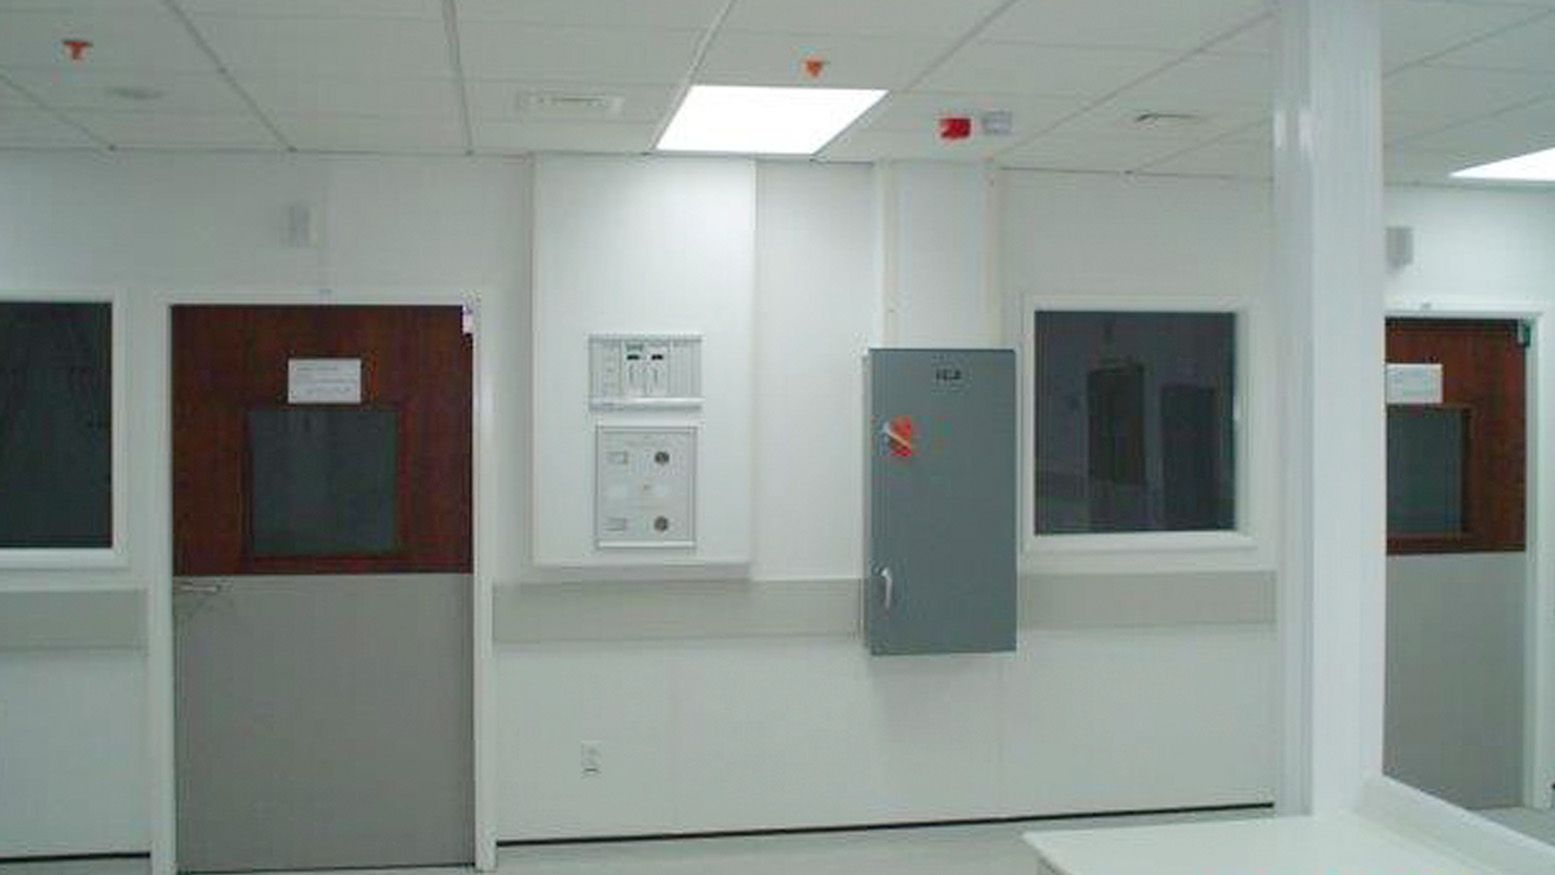 PKL Bagram Modular hospital Interior